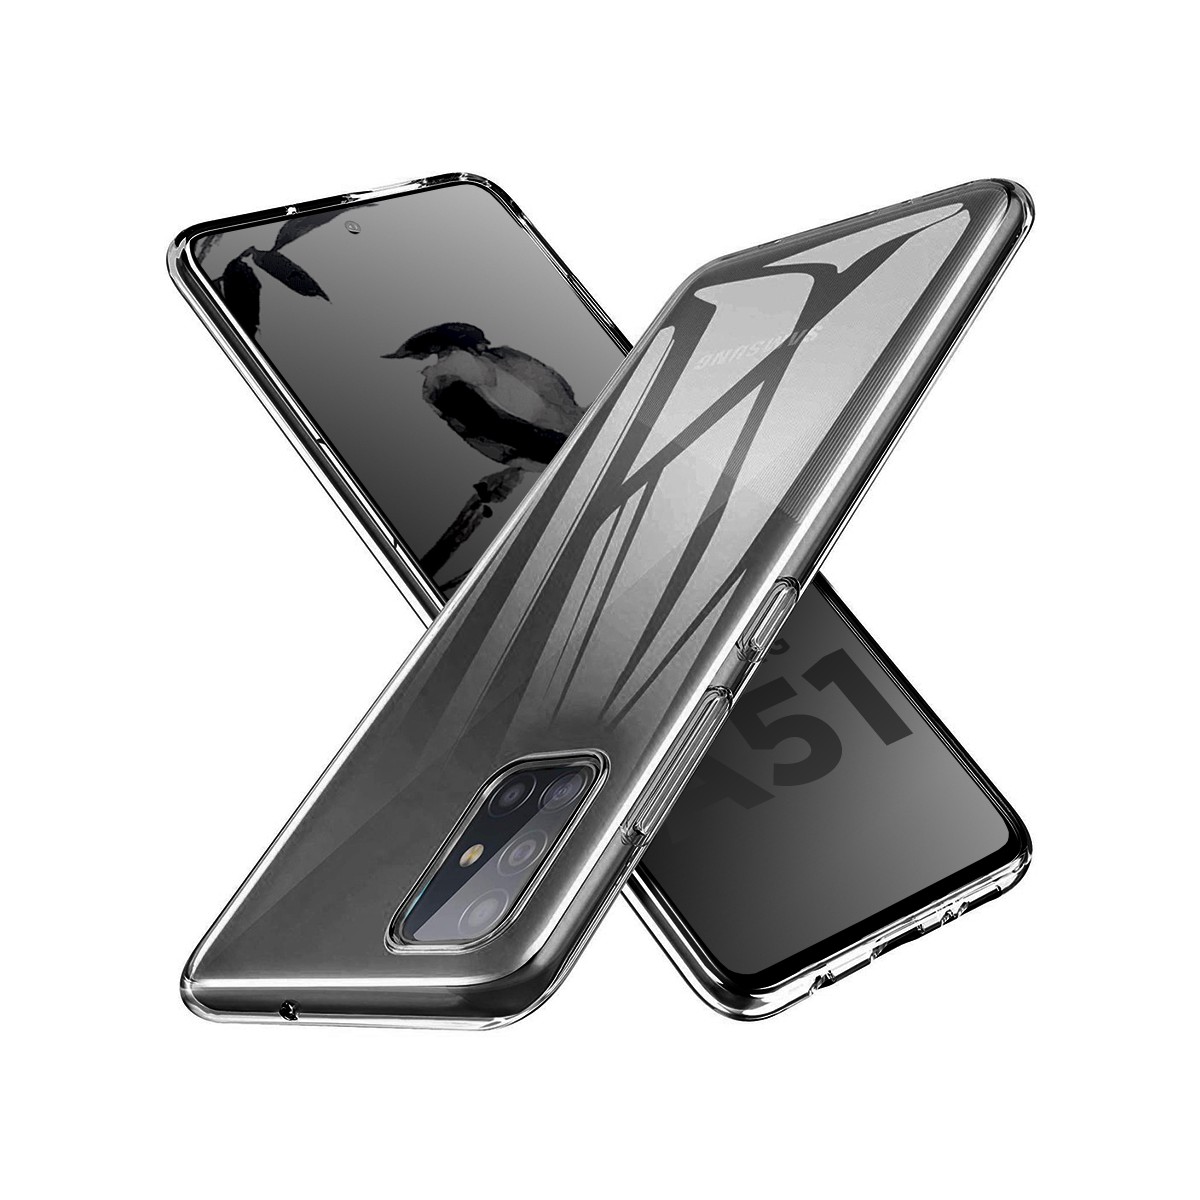 Akami Coque Samsung Galaxy A51 Transparente en silicone de haute qualité